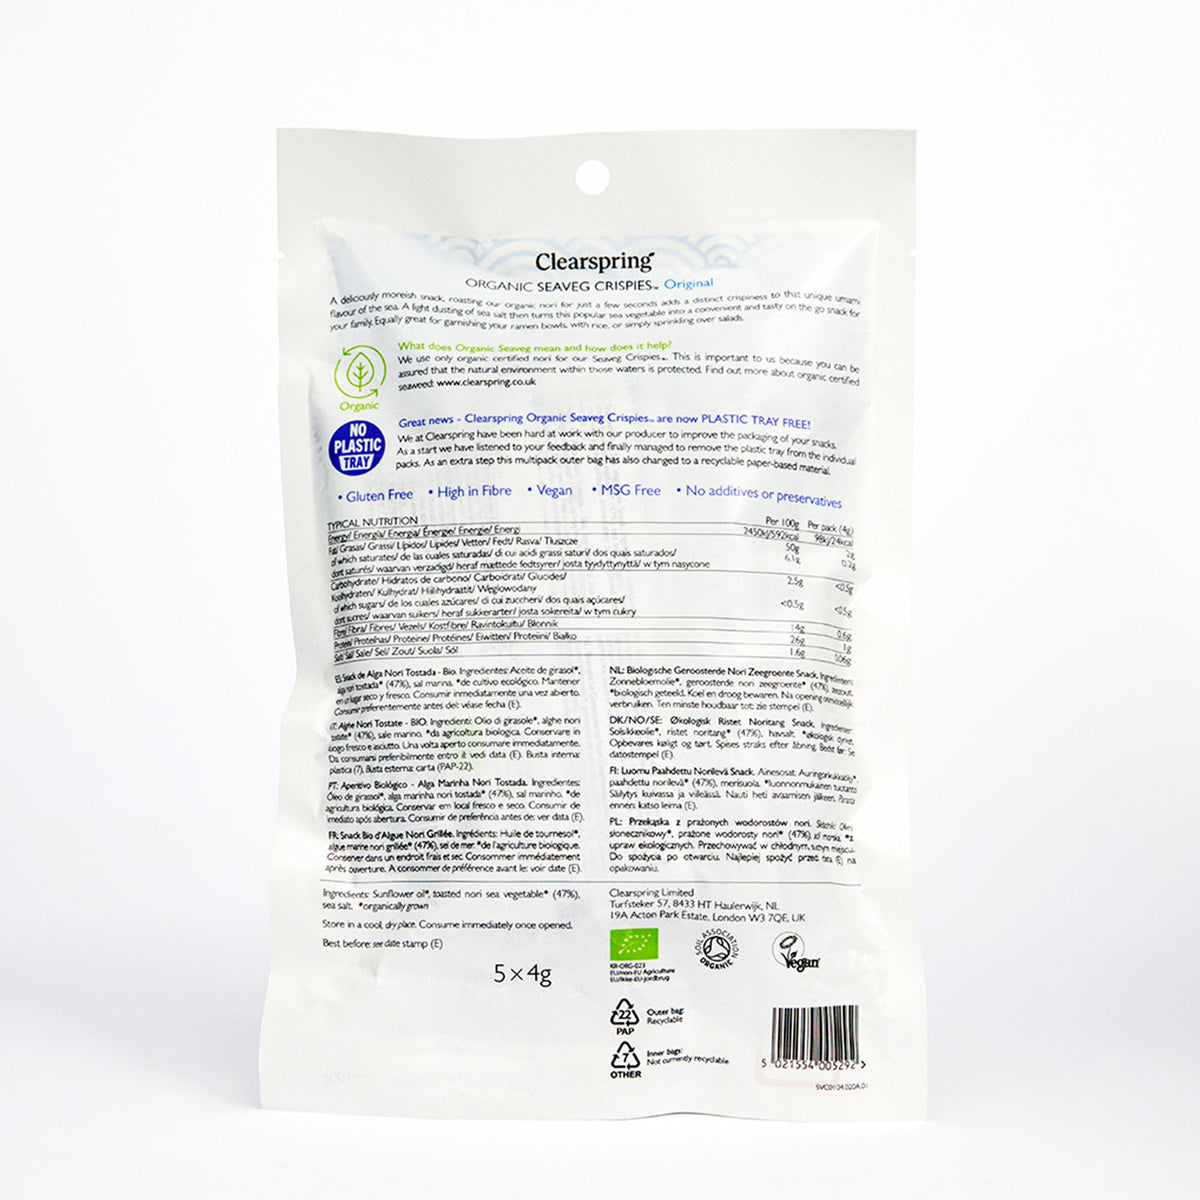 Organic Seaveg Crispies Multipack - Original (Crispy Seaweed Thins) (6 Pack)